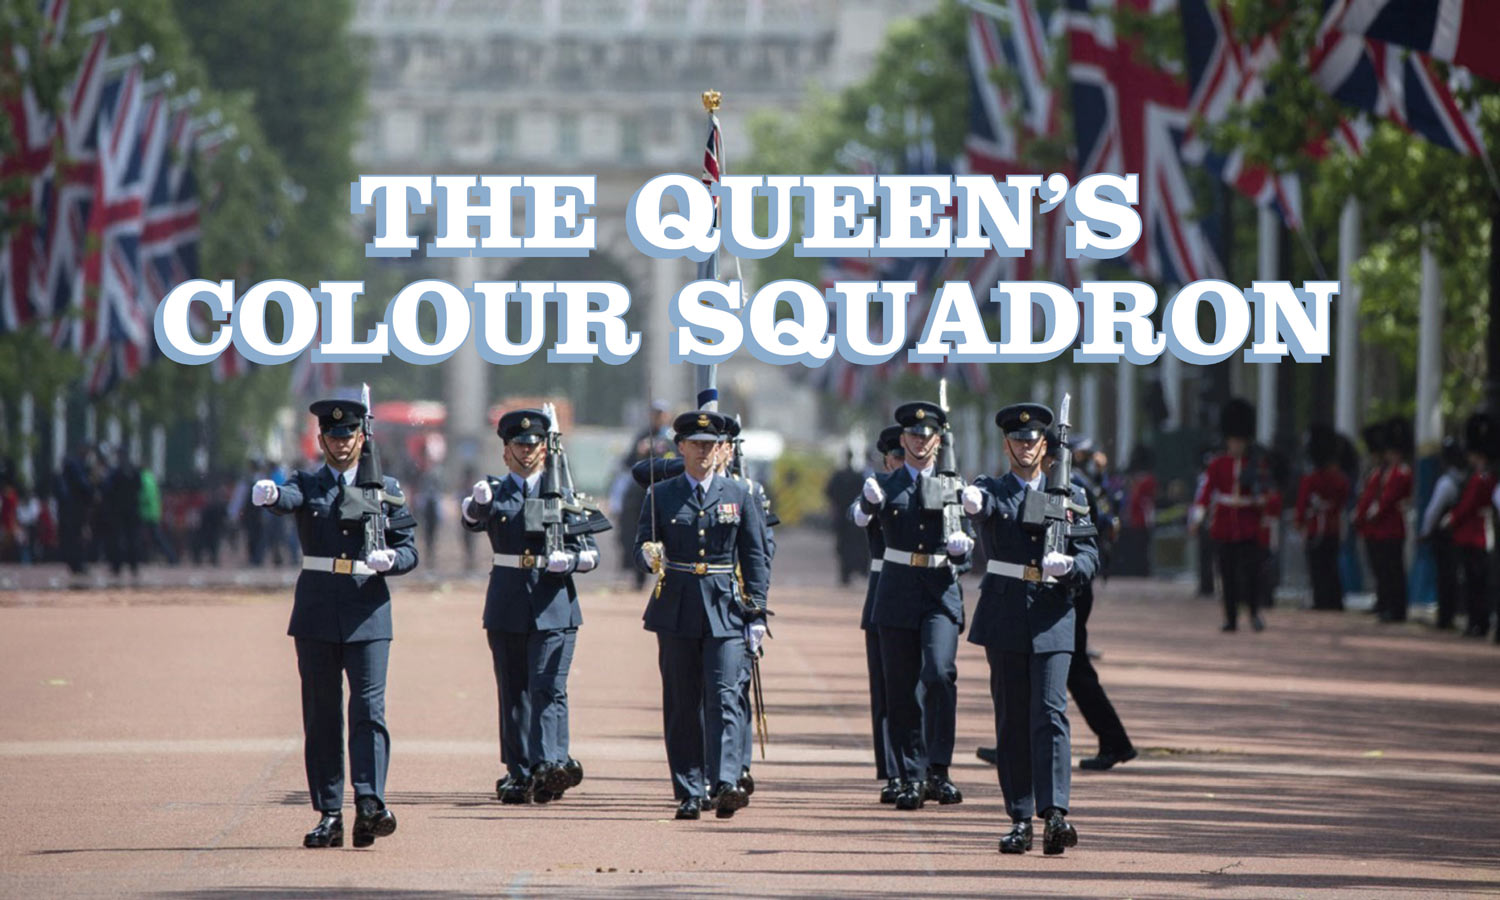 The Queen's Colour Squadron